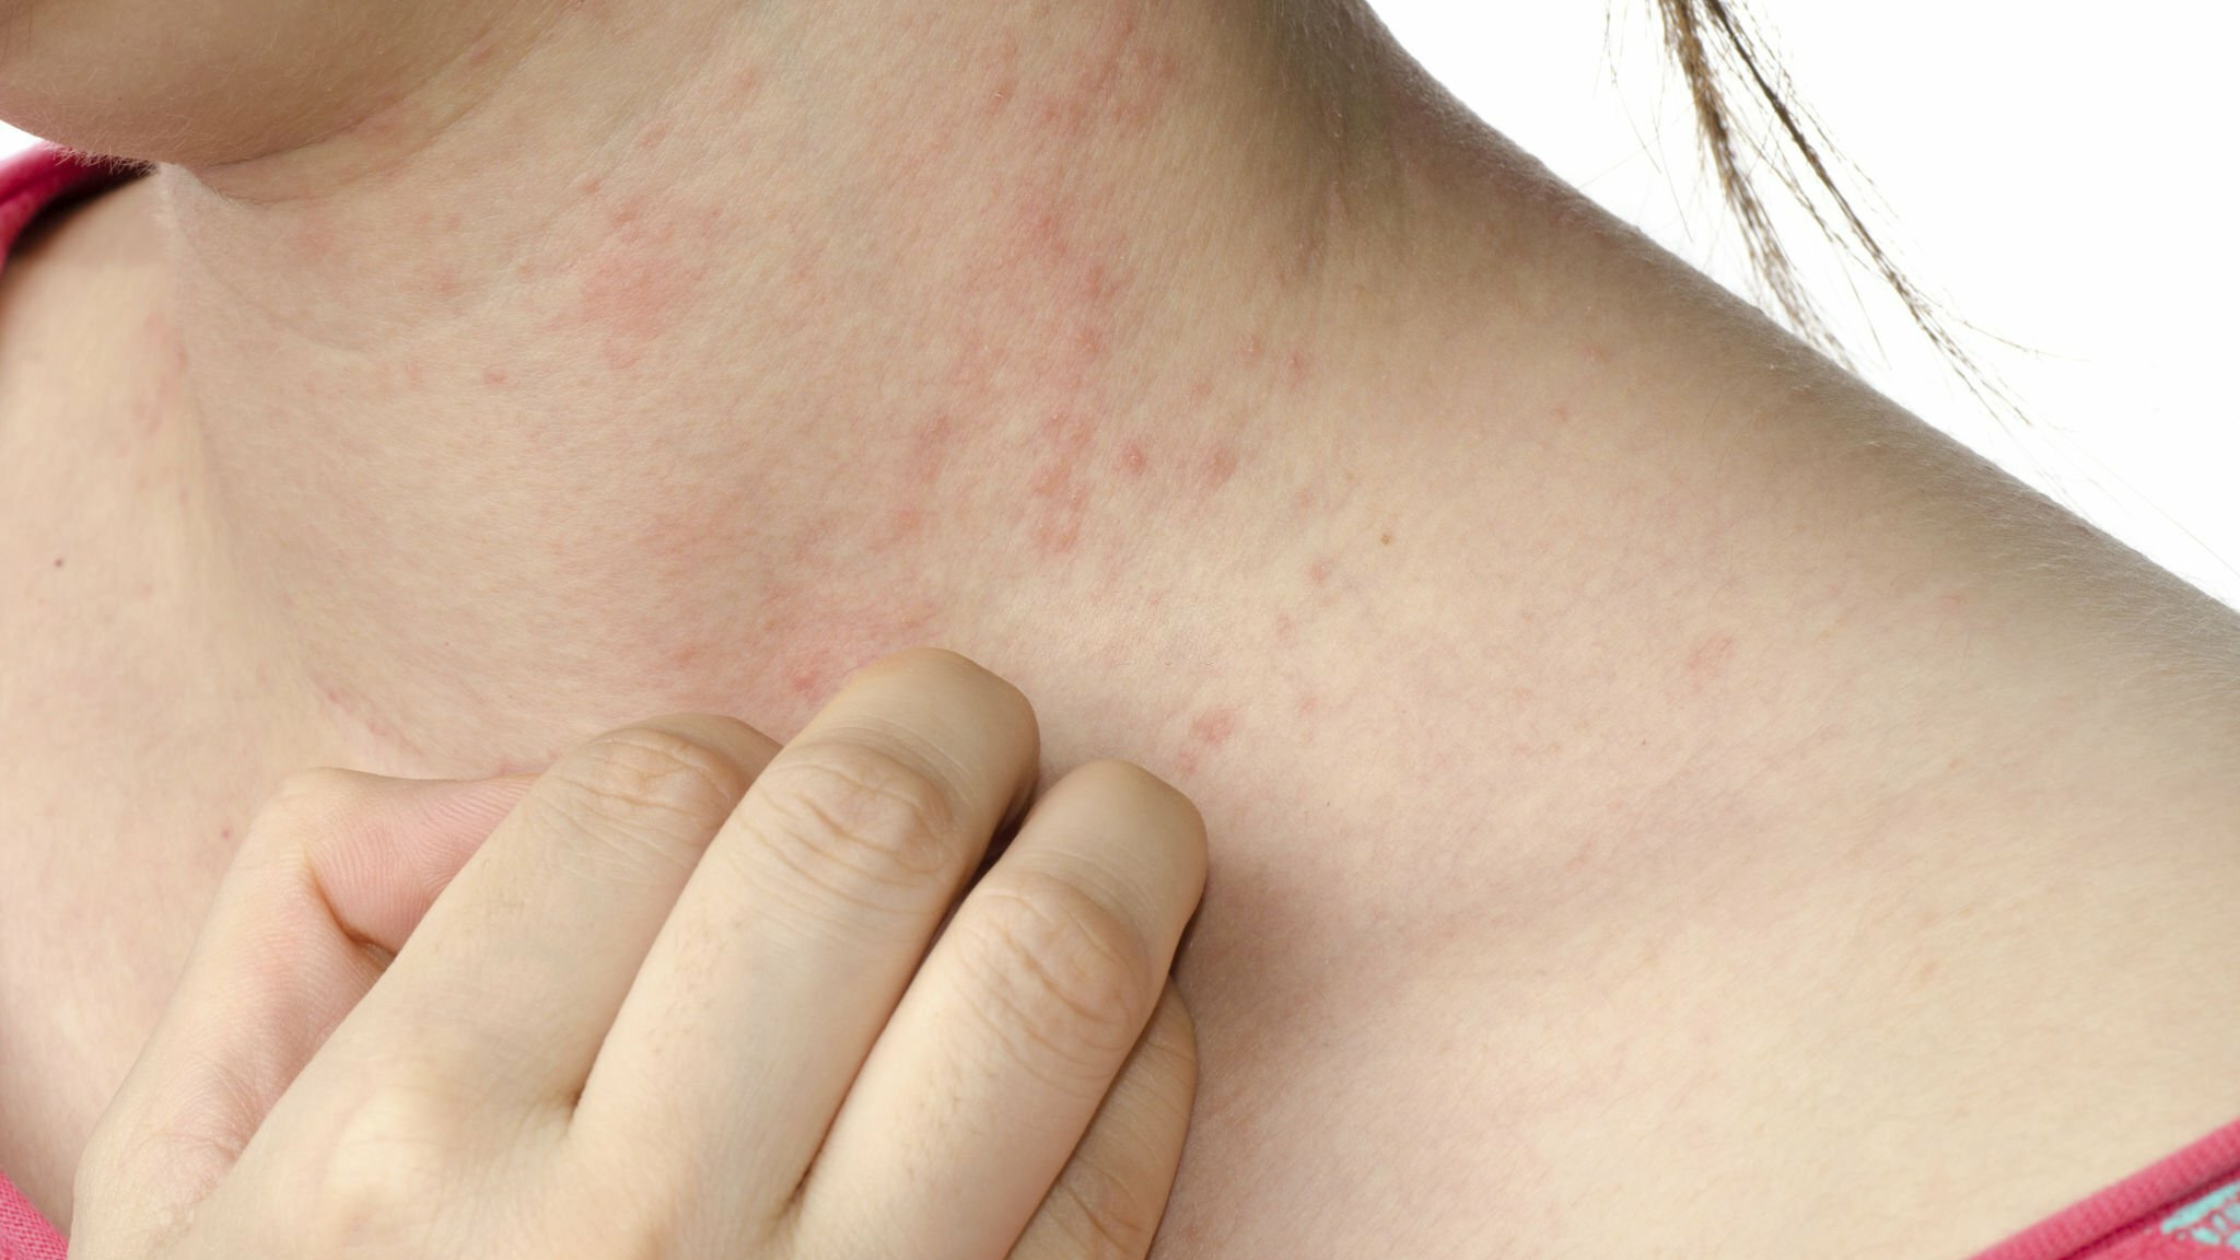 The Most Common Type of Eczema: Atopic dermatitis